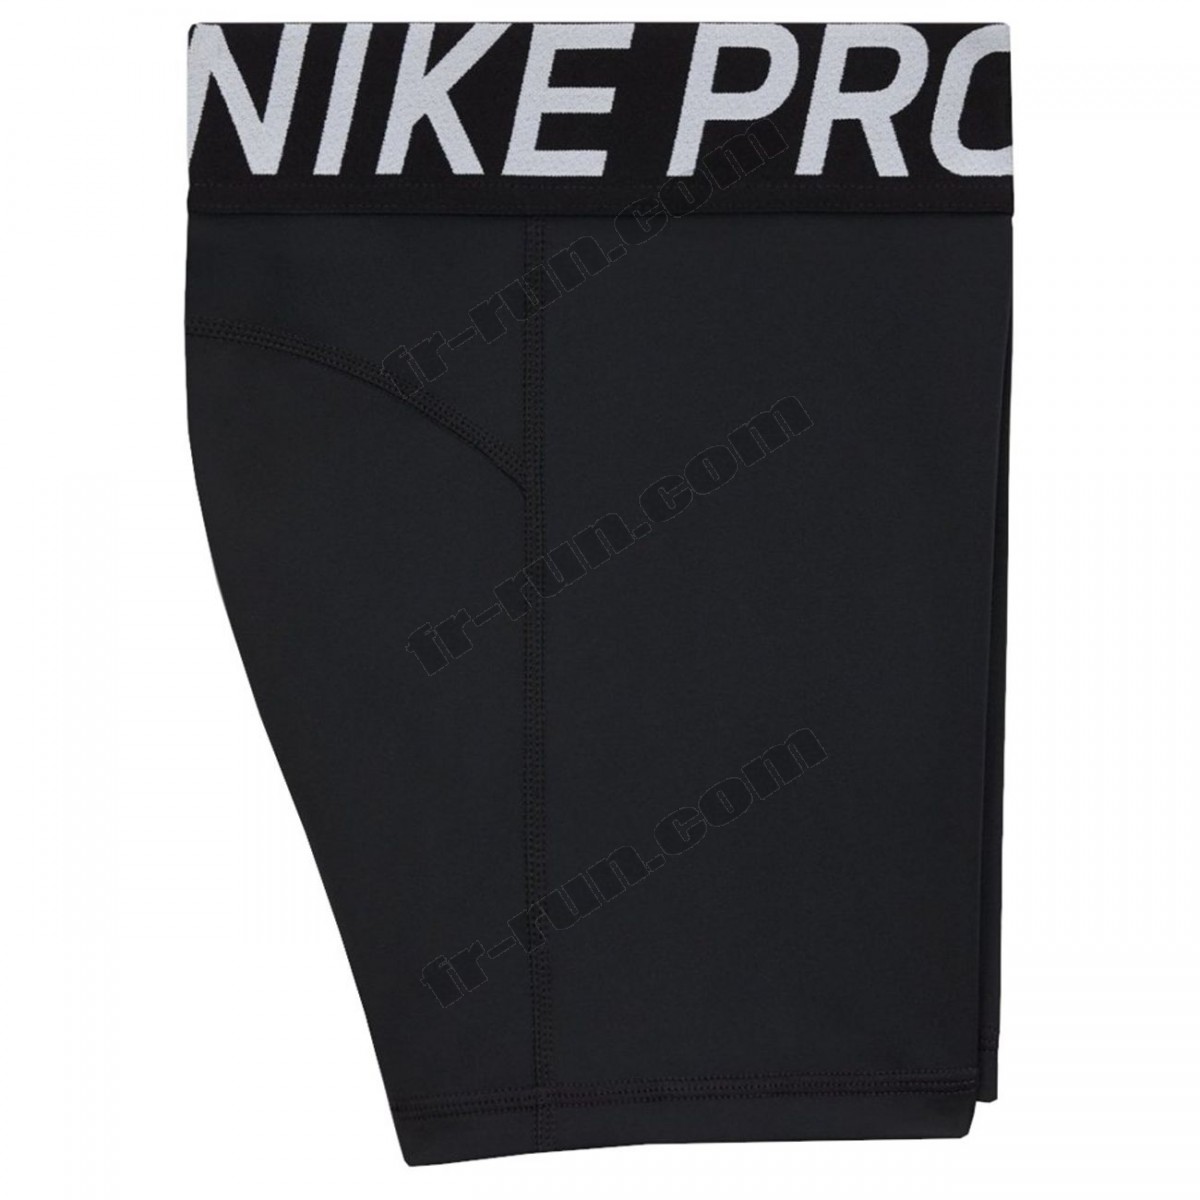 Nike/Training homme NIKE Nike Pro 3IN Drifit ◇◇◇ Pas Cher Du Tout - -5